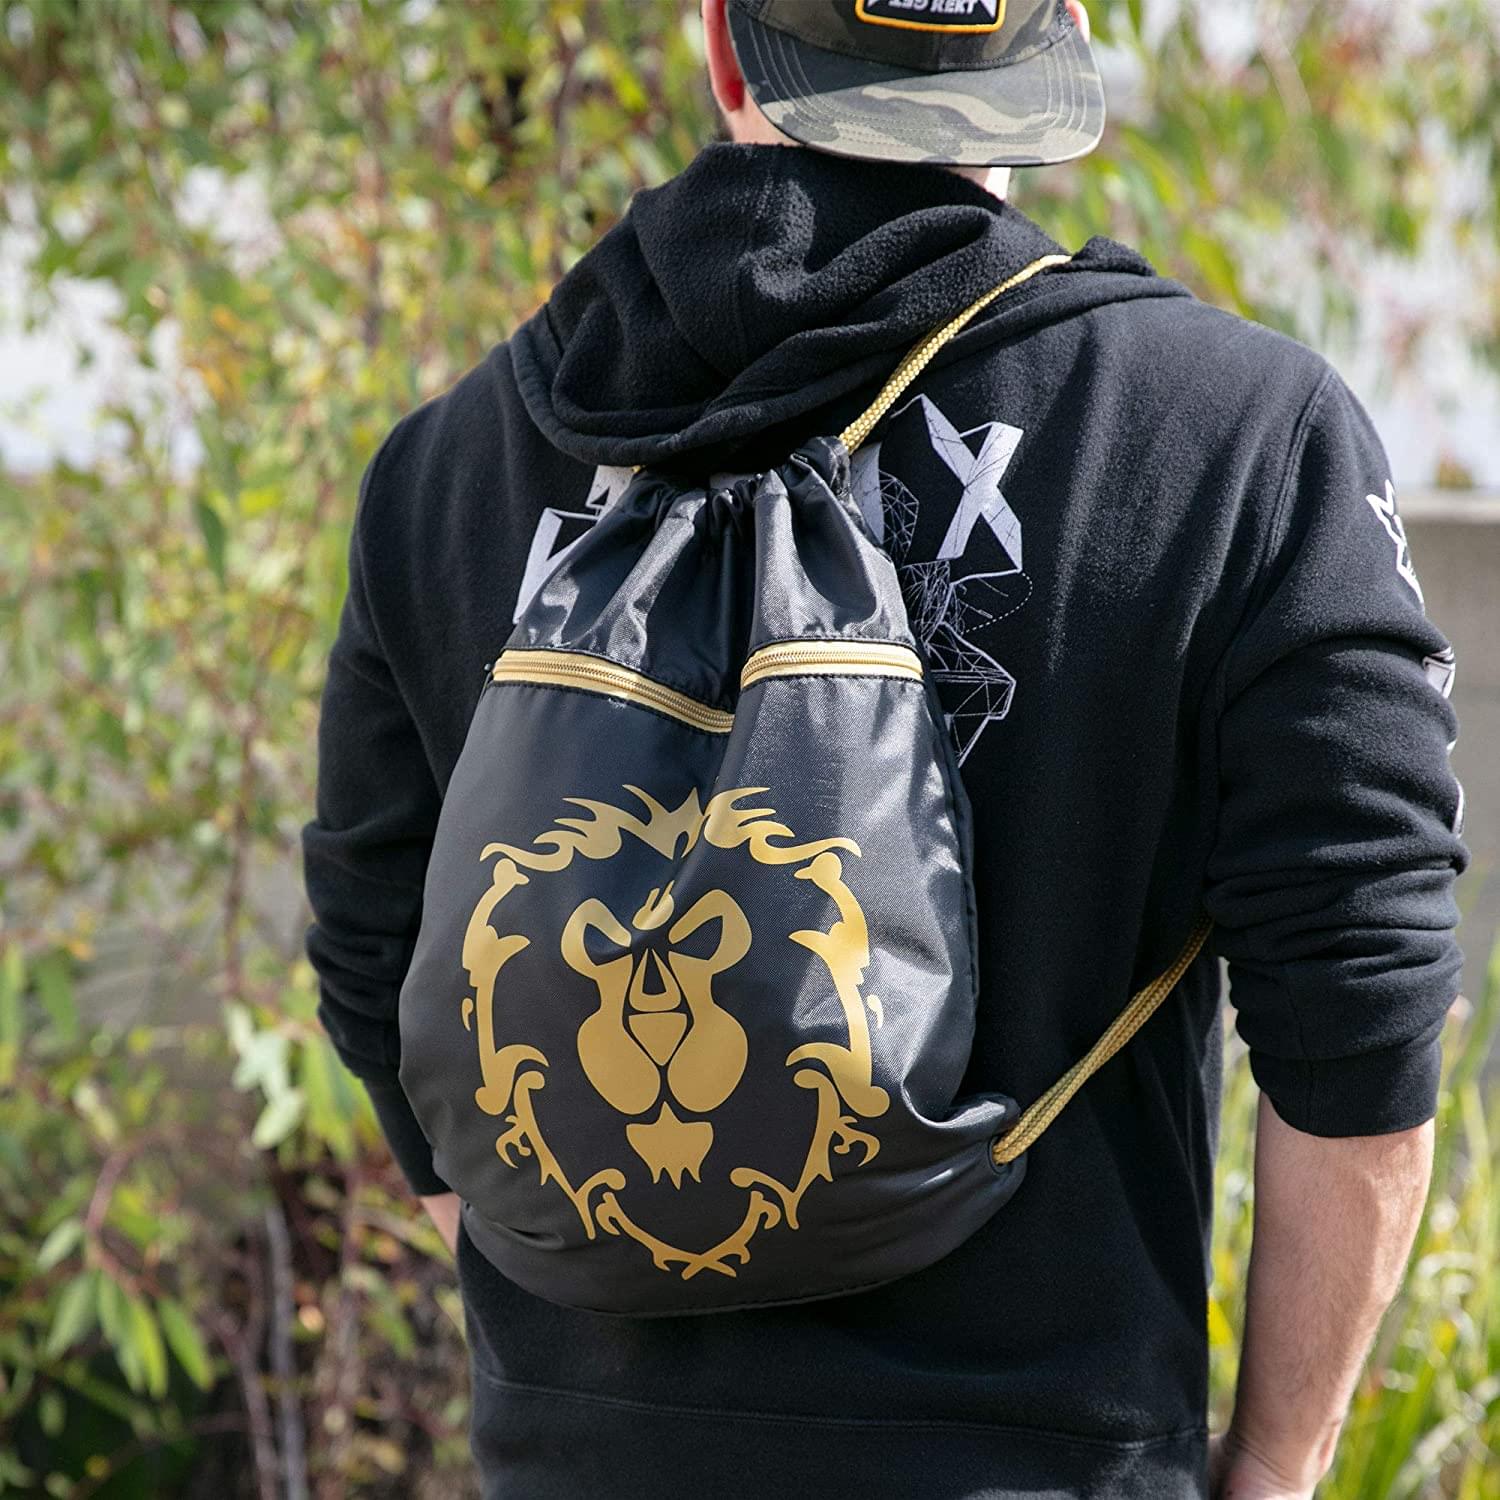 World of Warcraft Alliance Loot Bag 14 x 19 Inch Drawstring Cinch Backpack